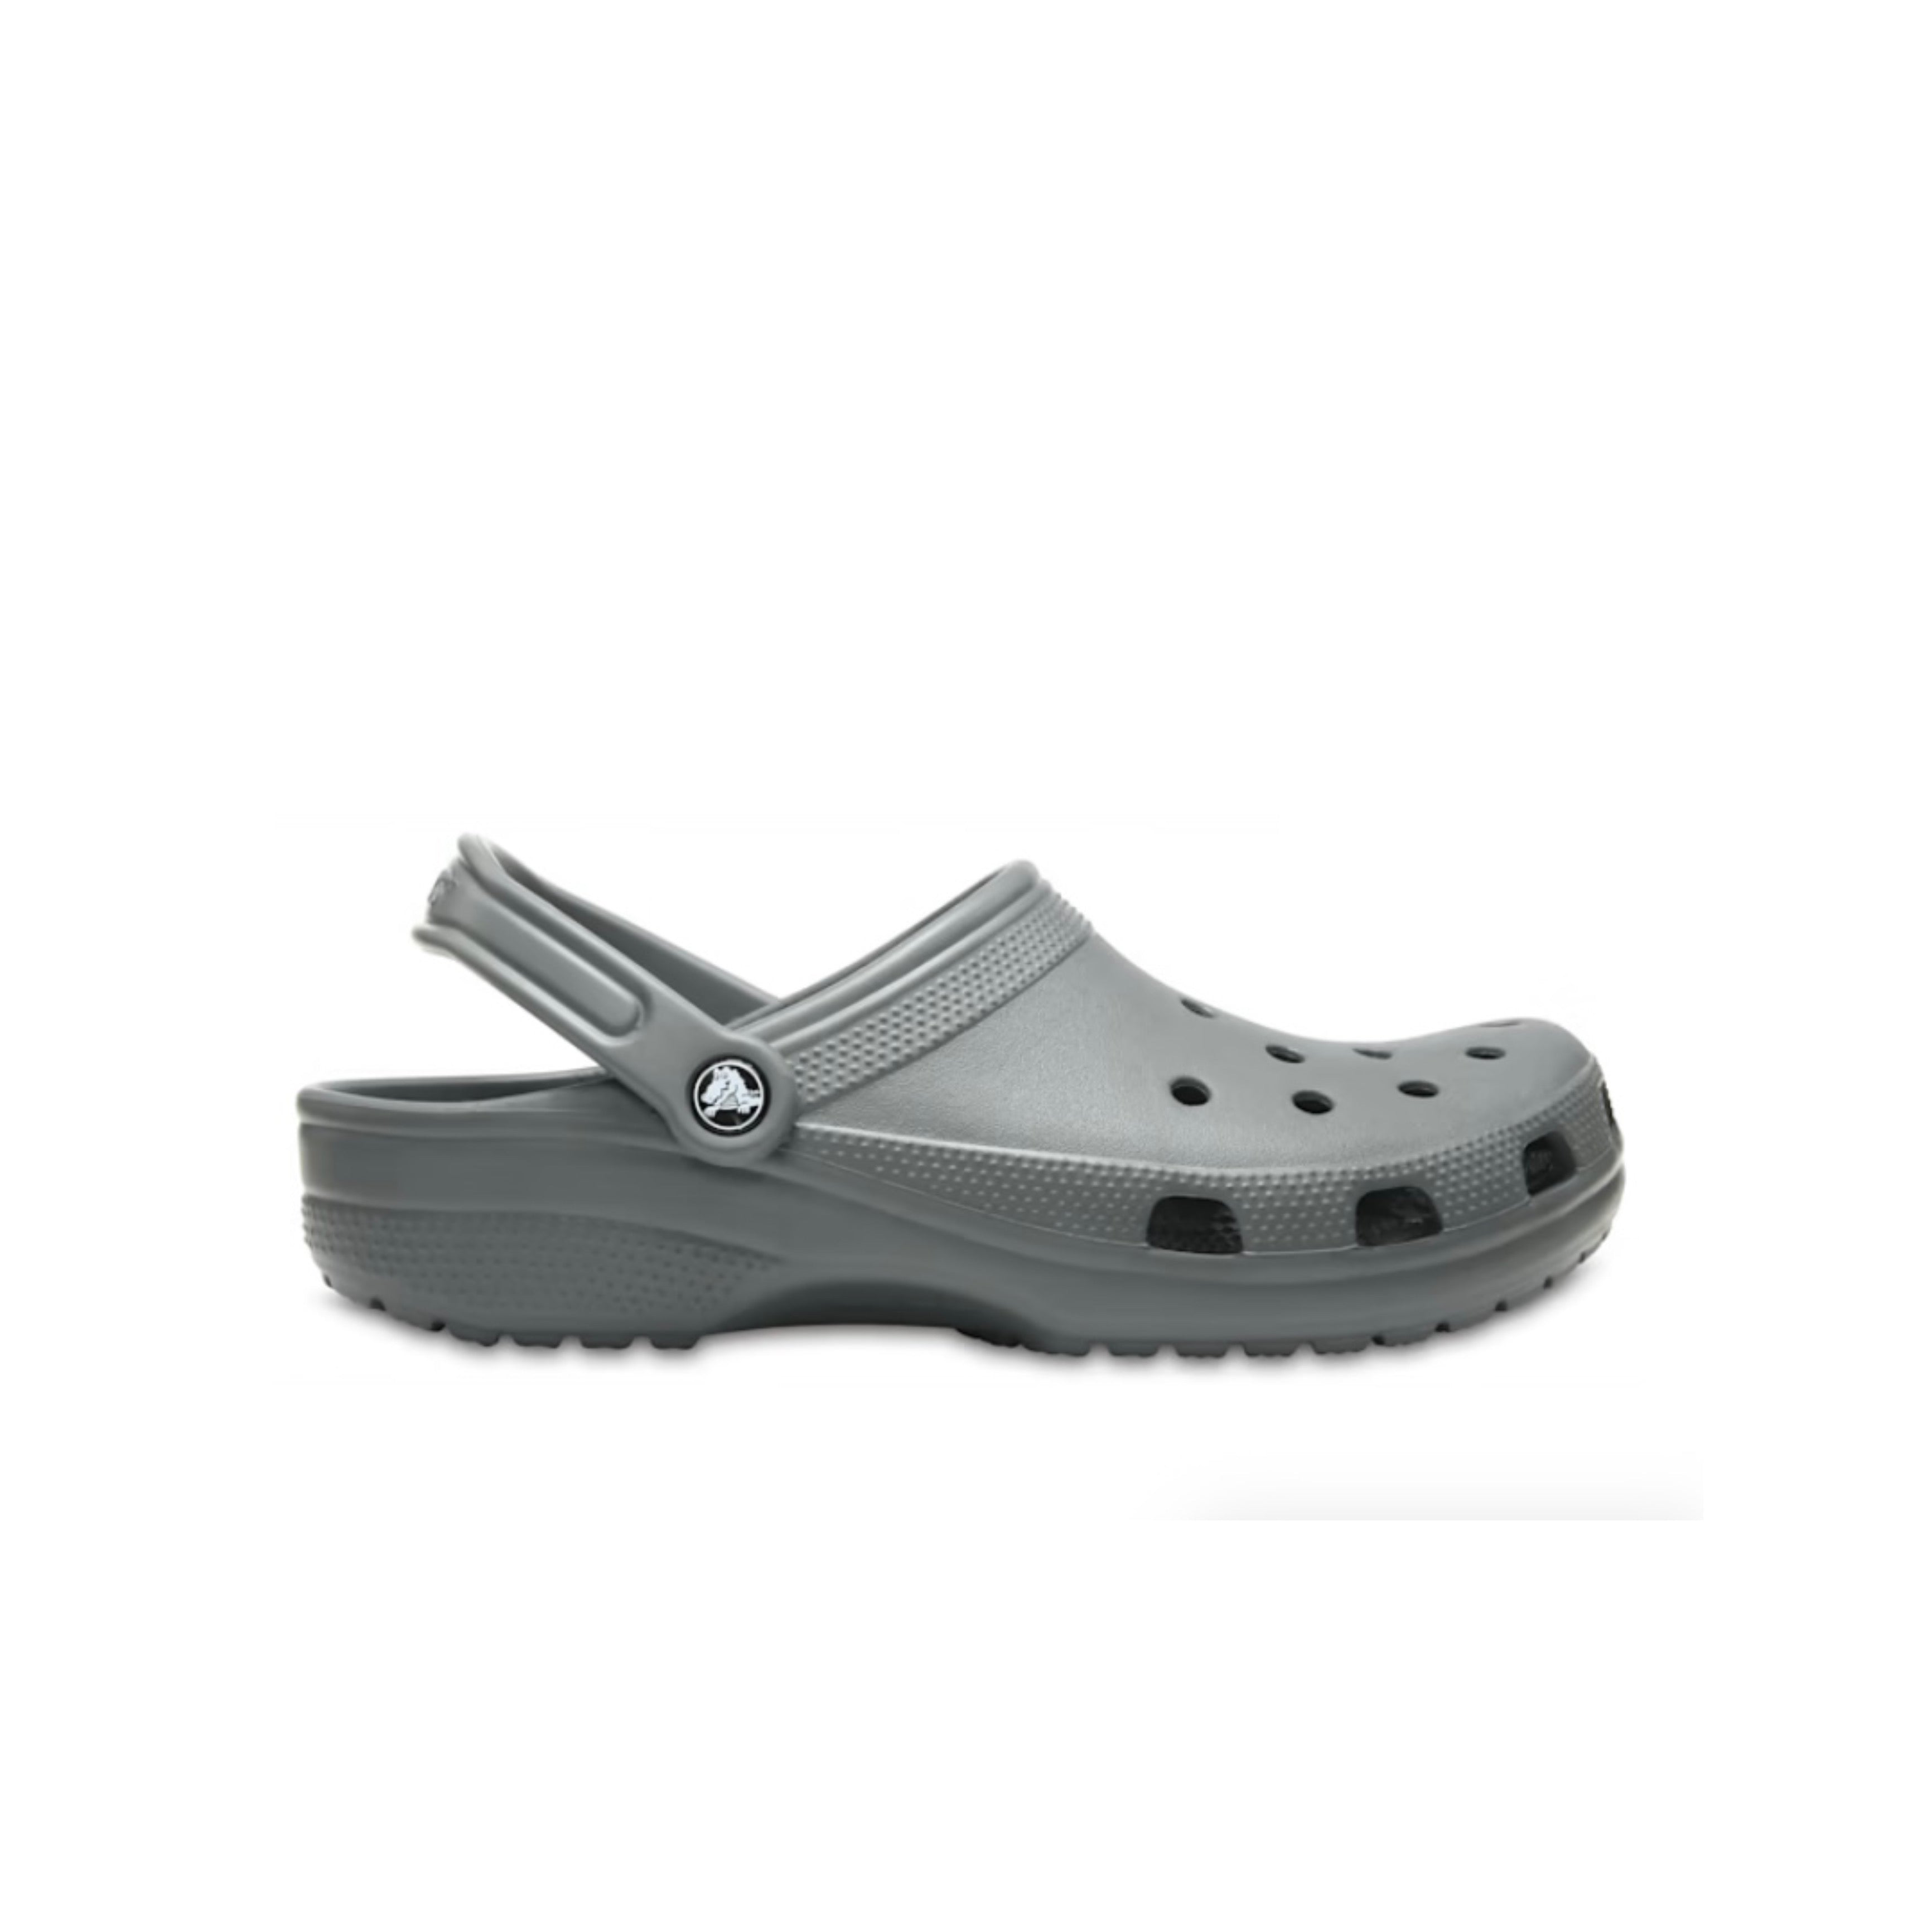 Crocs dark grey